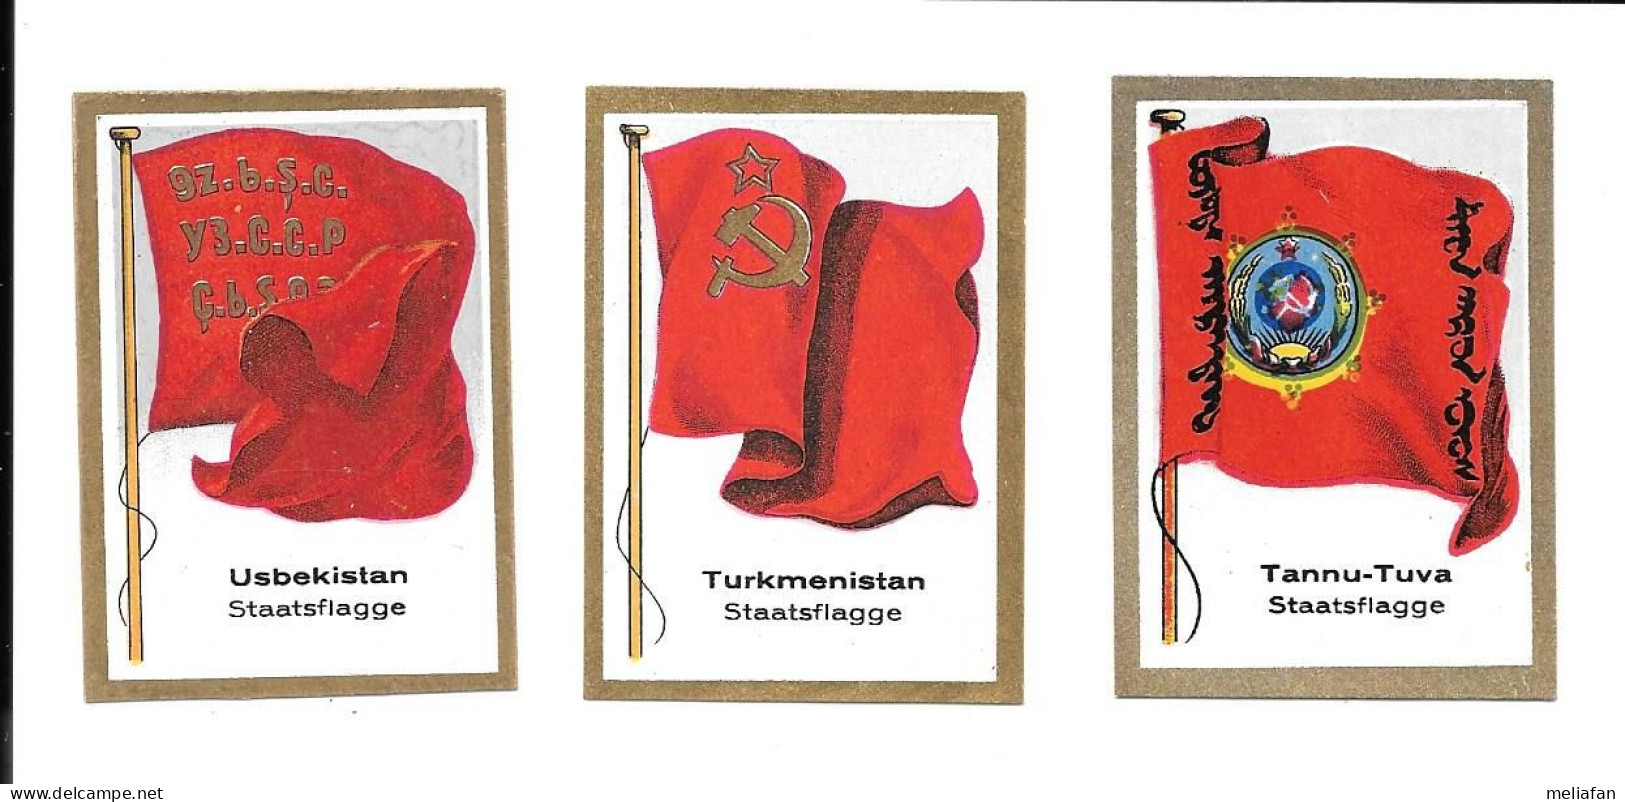 BV63 - IMAGES CIGARETTES BULGARIA - SERIE DRAPEAUX - URSS - TURKMENISTAN - TANNU TUVA - OUZBEKISTAN - Zigarettenmarken